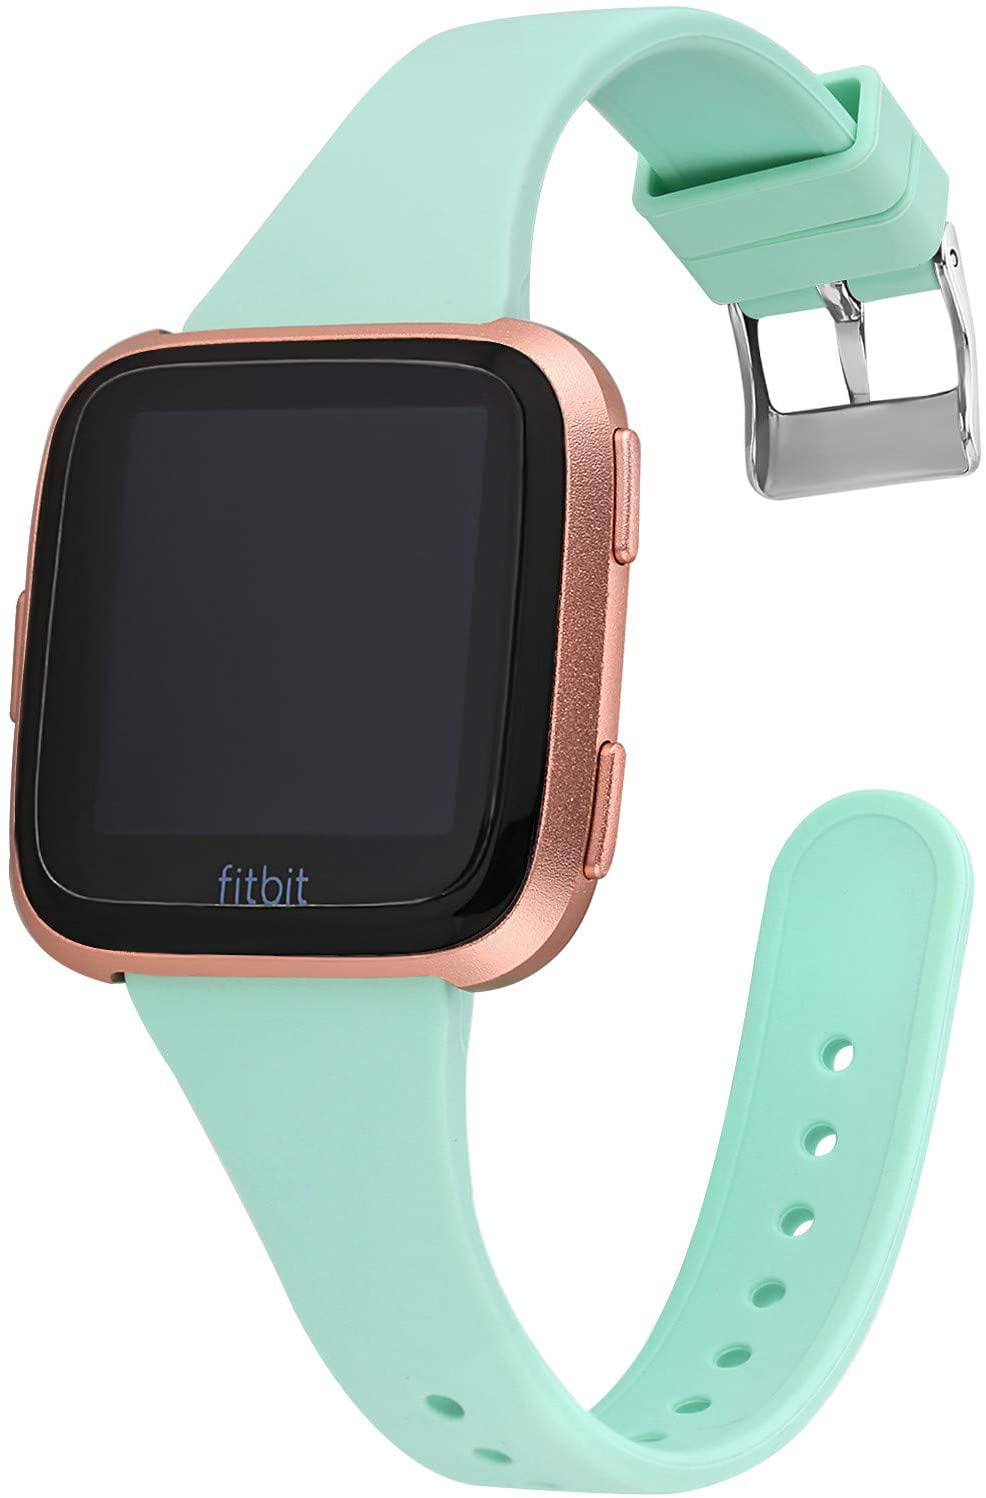 thin fitbit watch